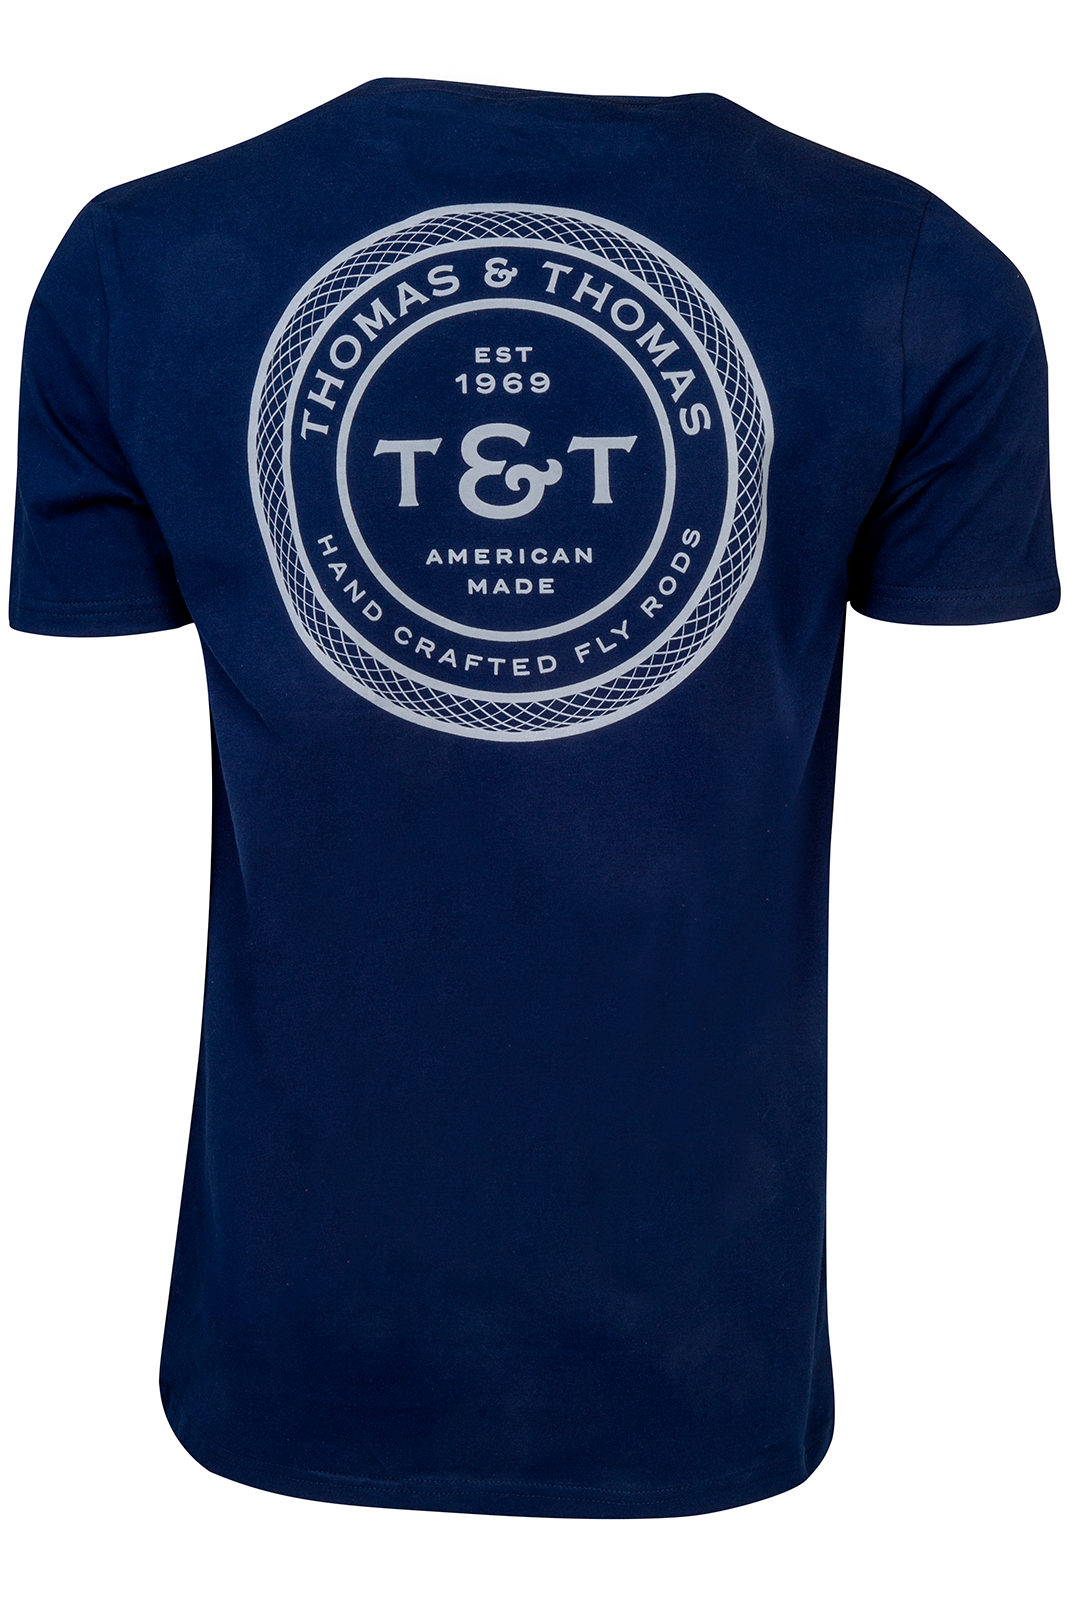 T&T Signature Pocket T-Shirt - Navy Blue – Thomas & Thomas